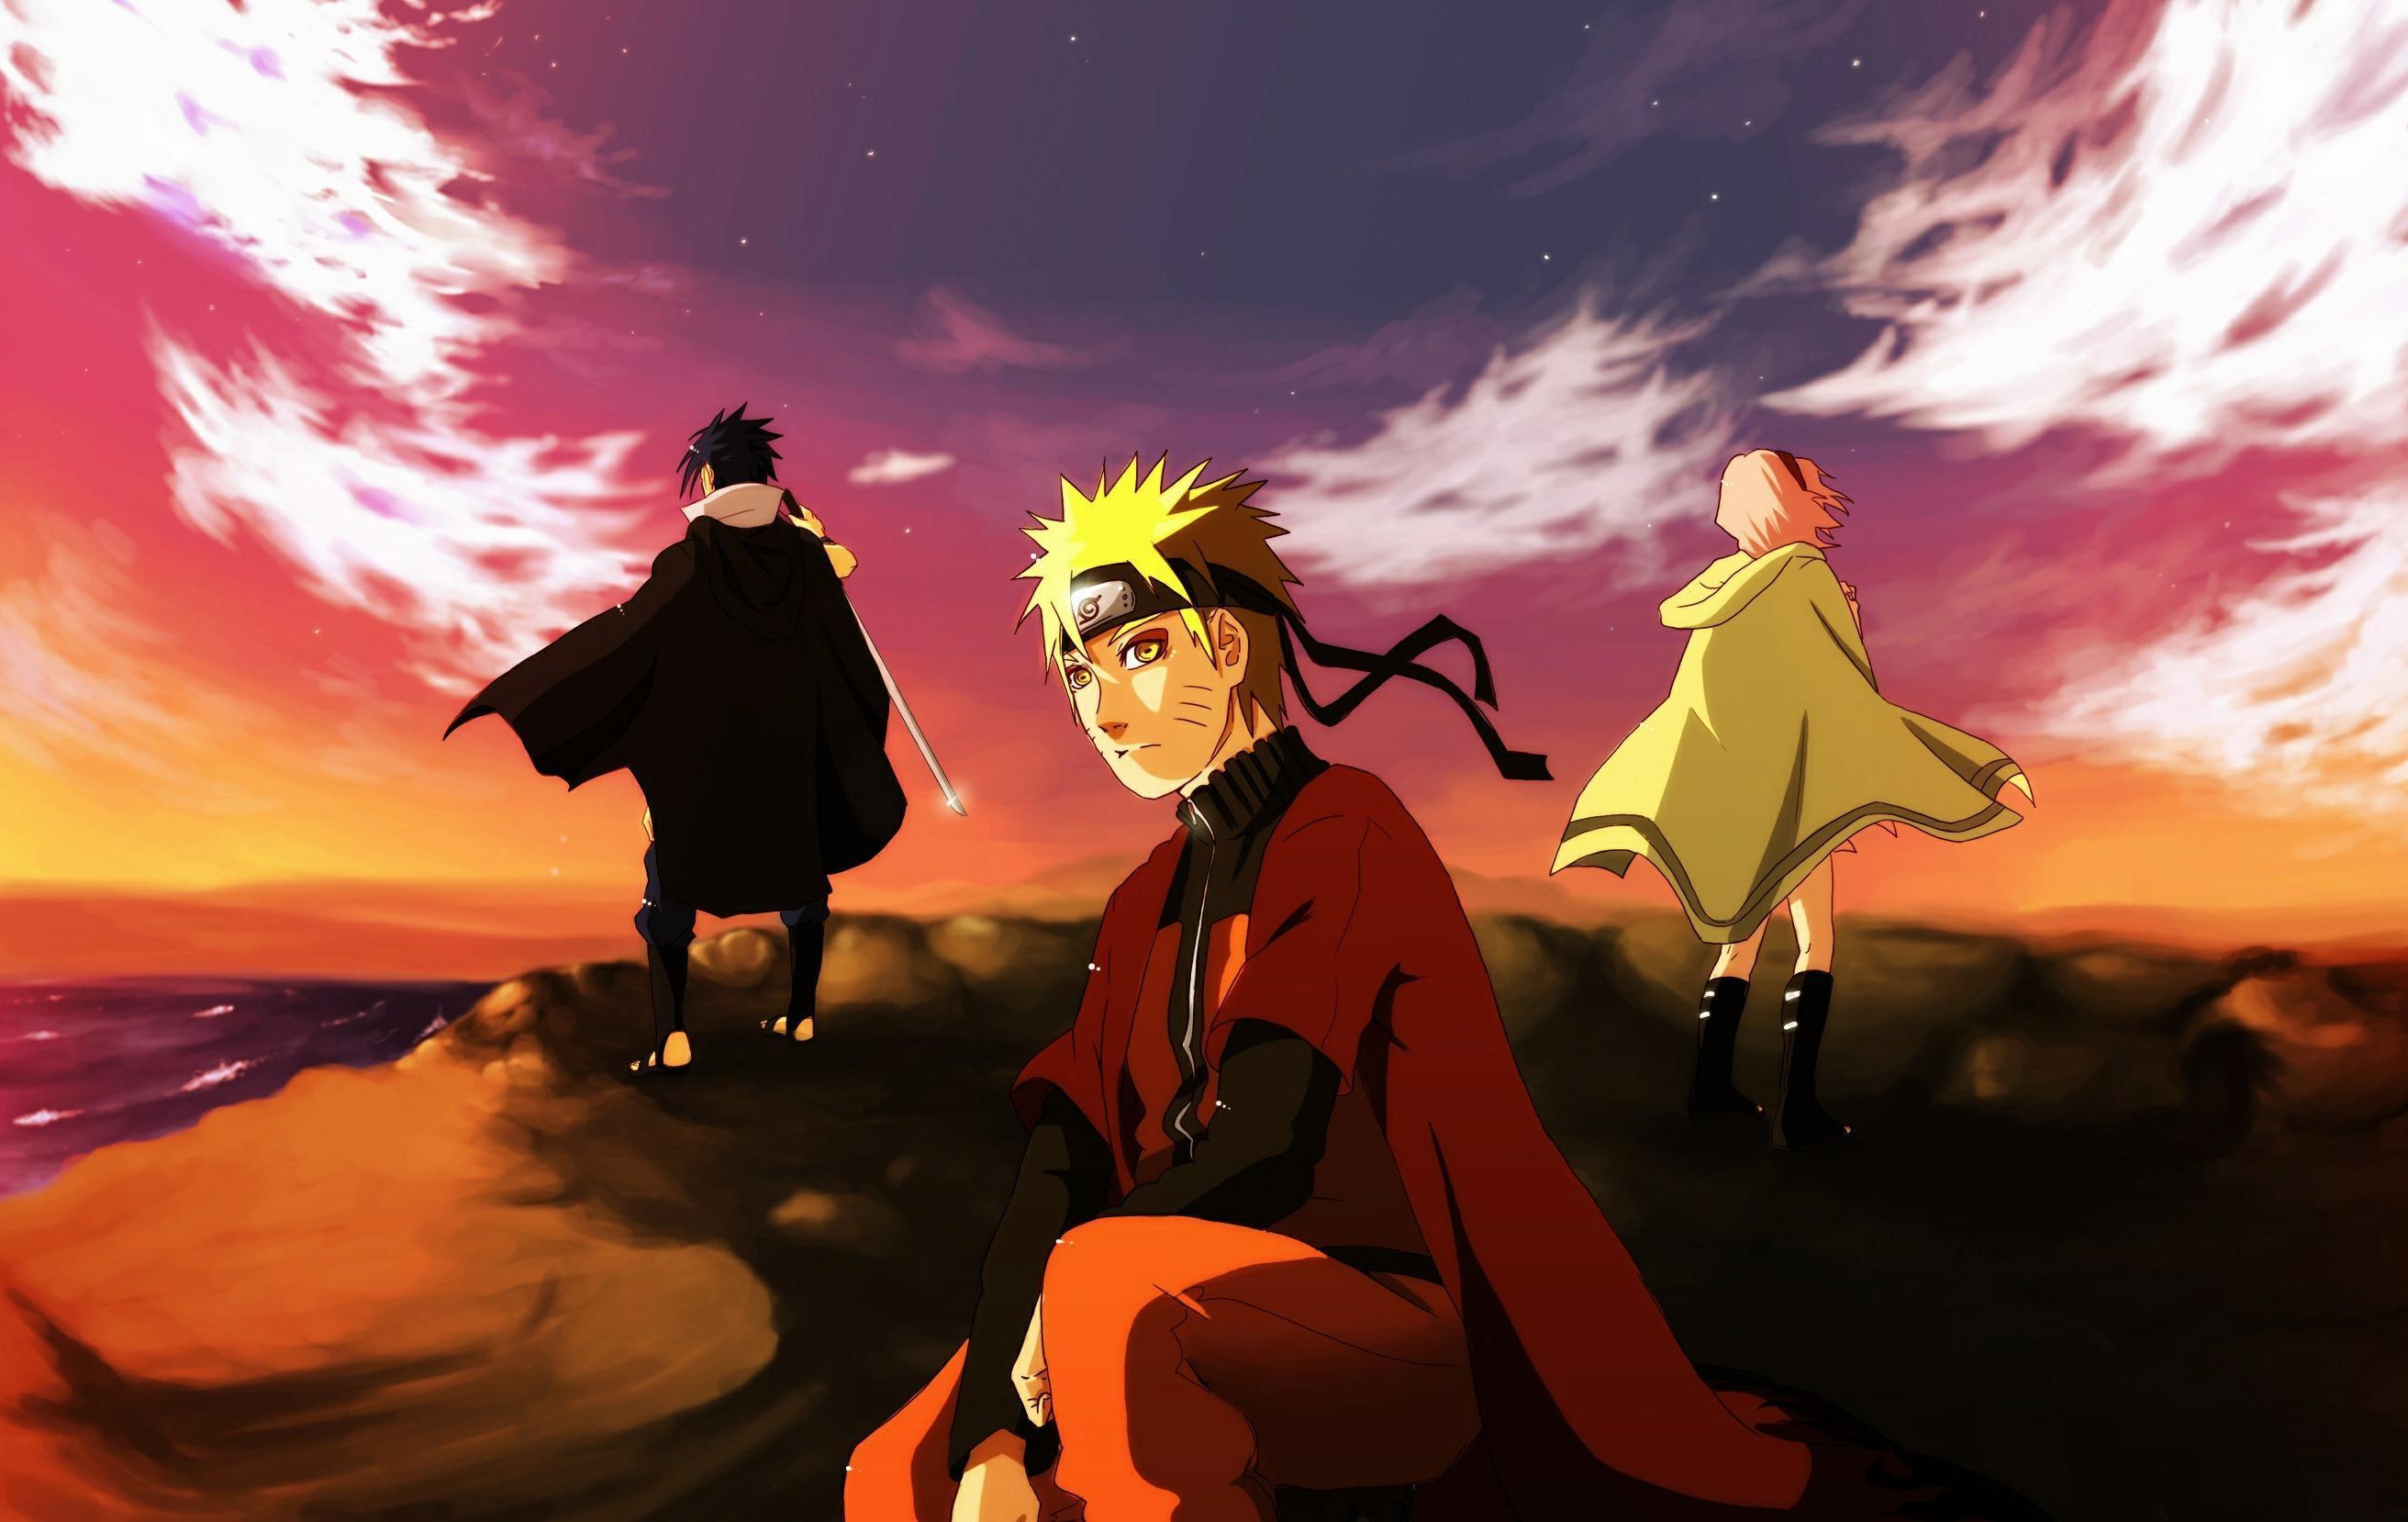 Wallpapers Naruto, Team von sieben, Sasuke Uchiha, Kunst, Meer.